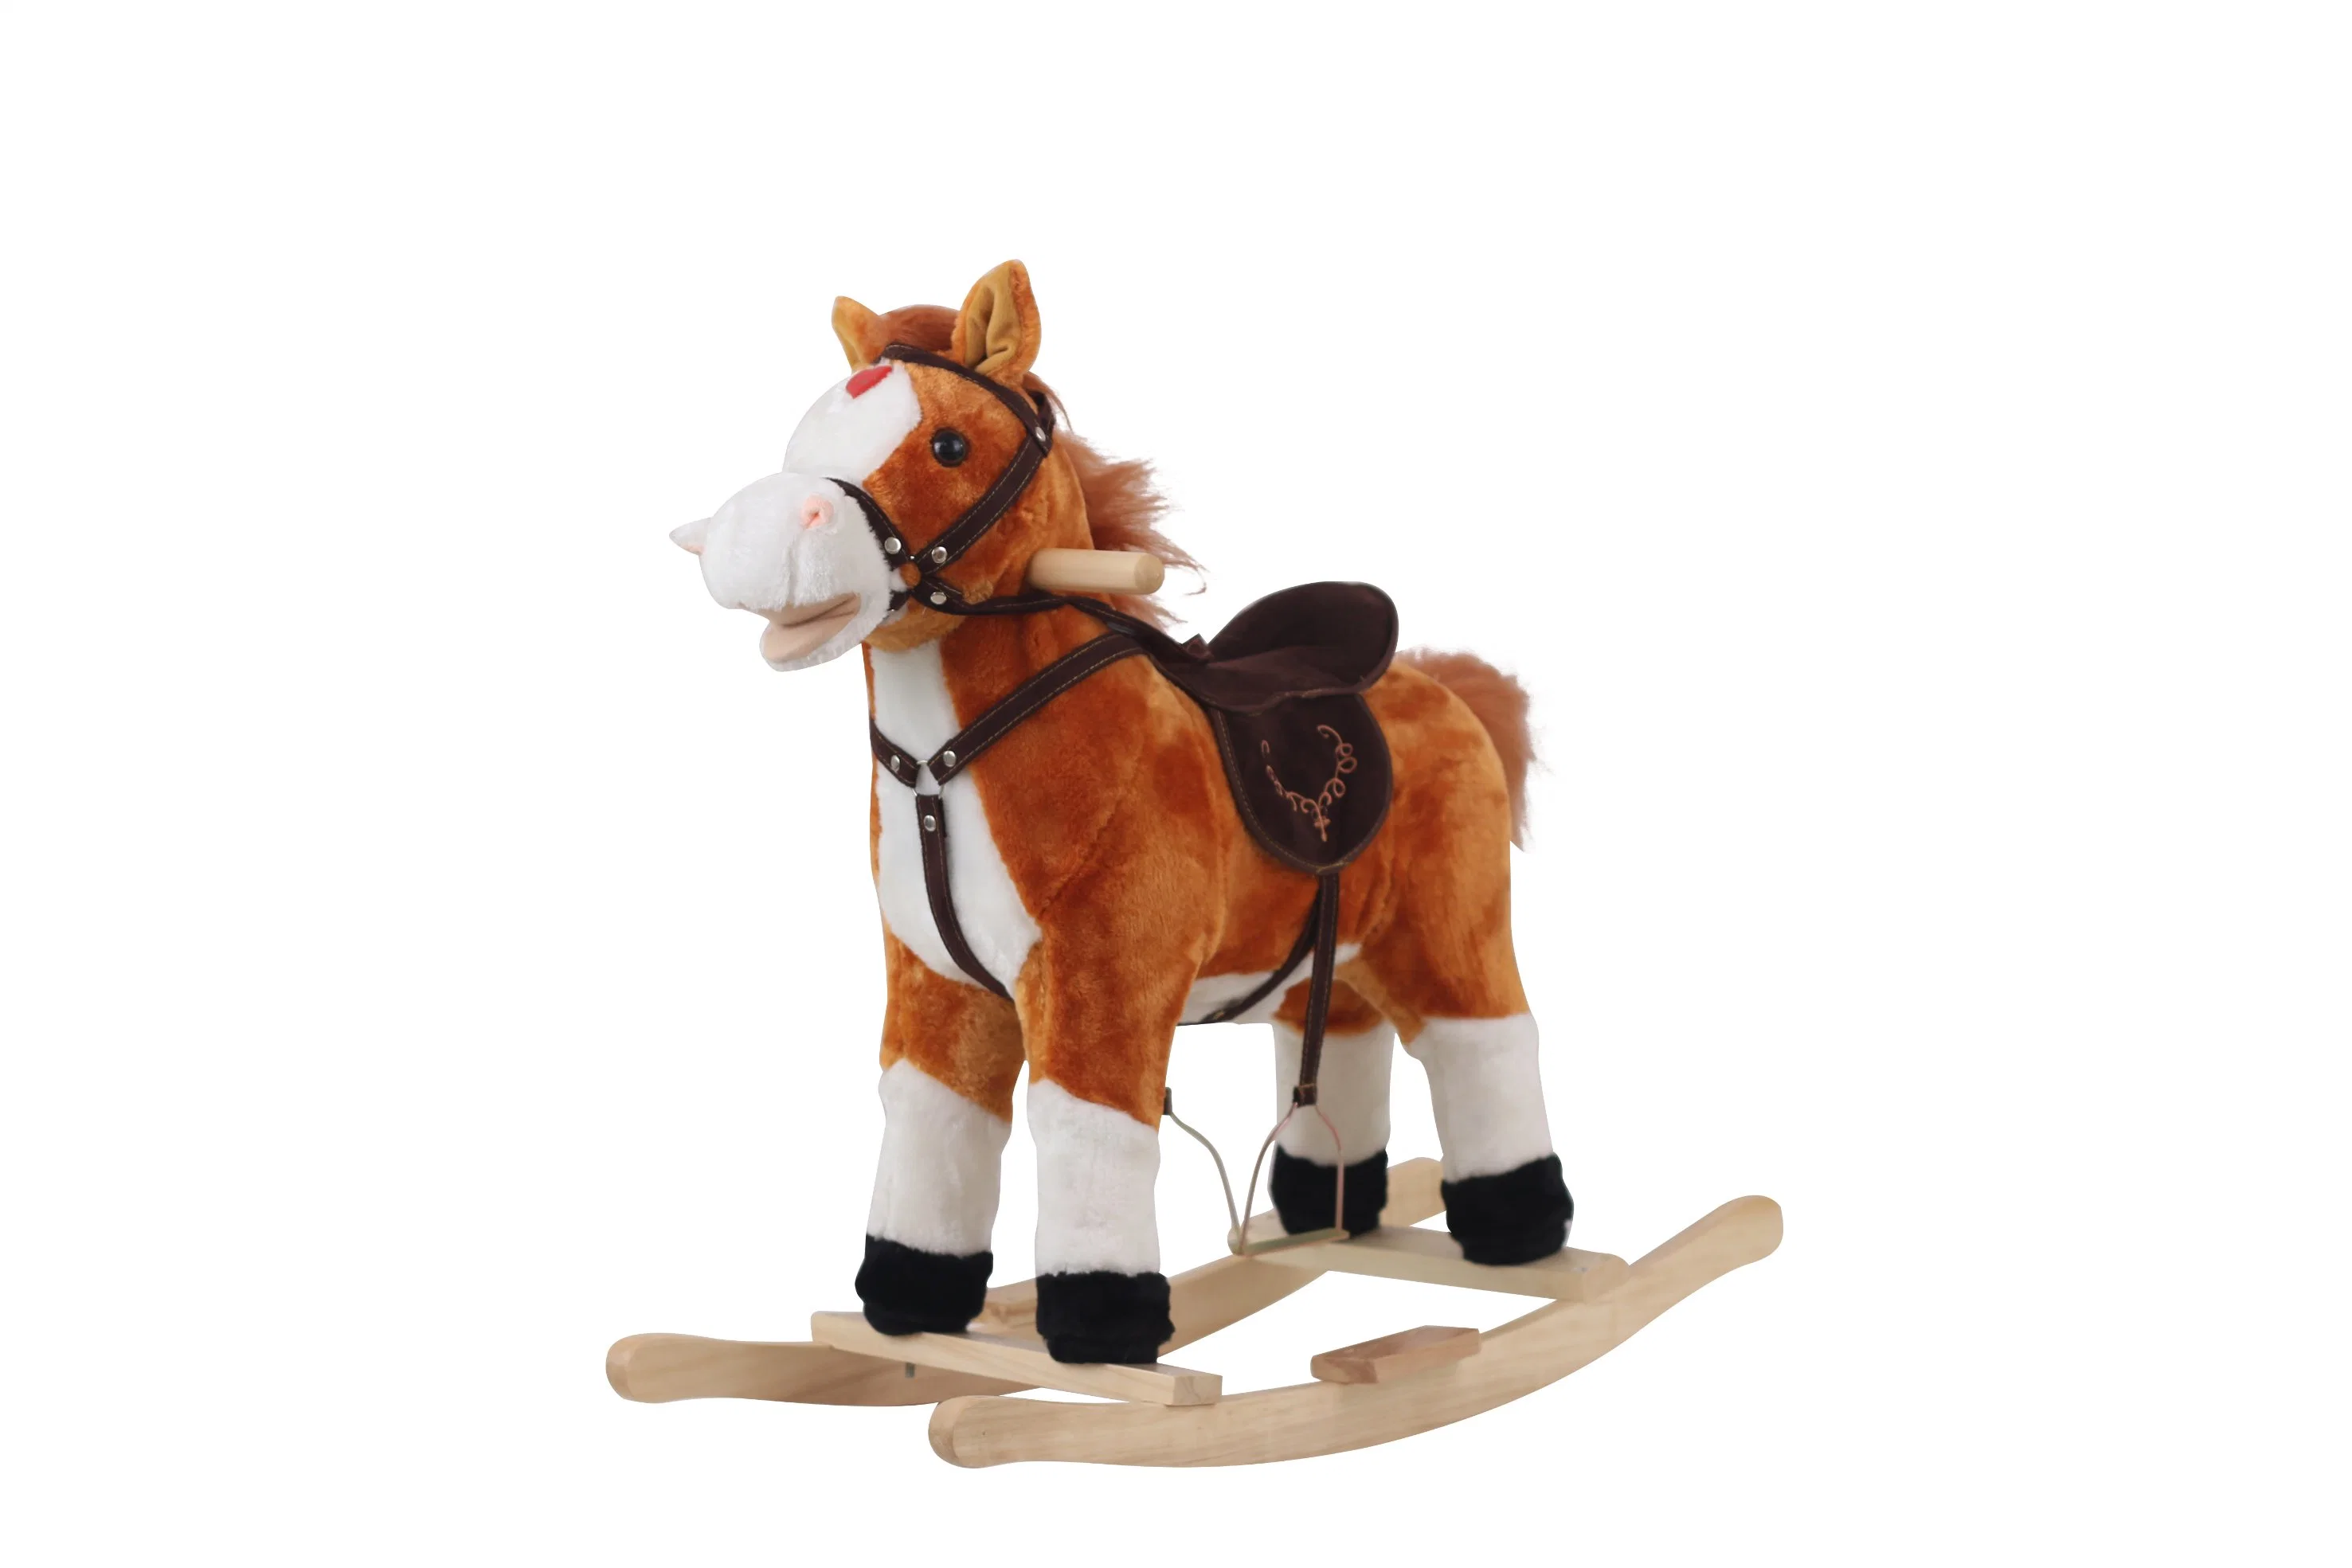 OEM ODM بالجملة الأطفال الأطفال الأطفال الخشبية ركوب الخيل اللعب الحصان اللينة